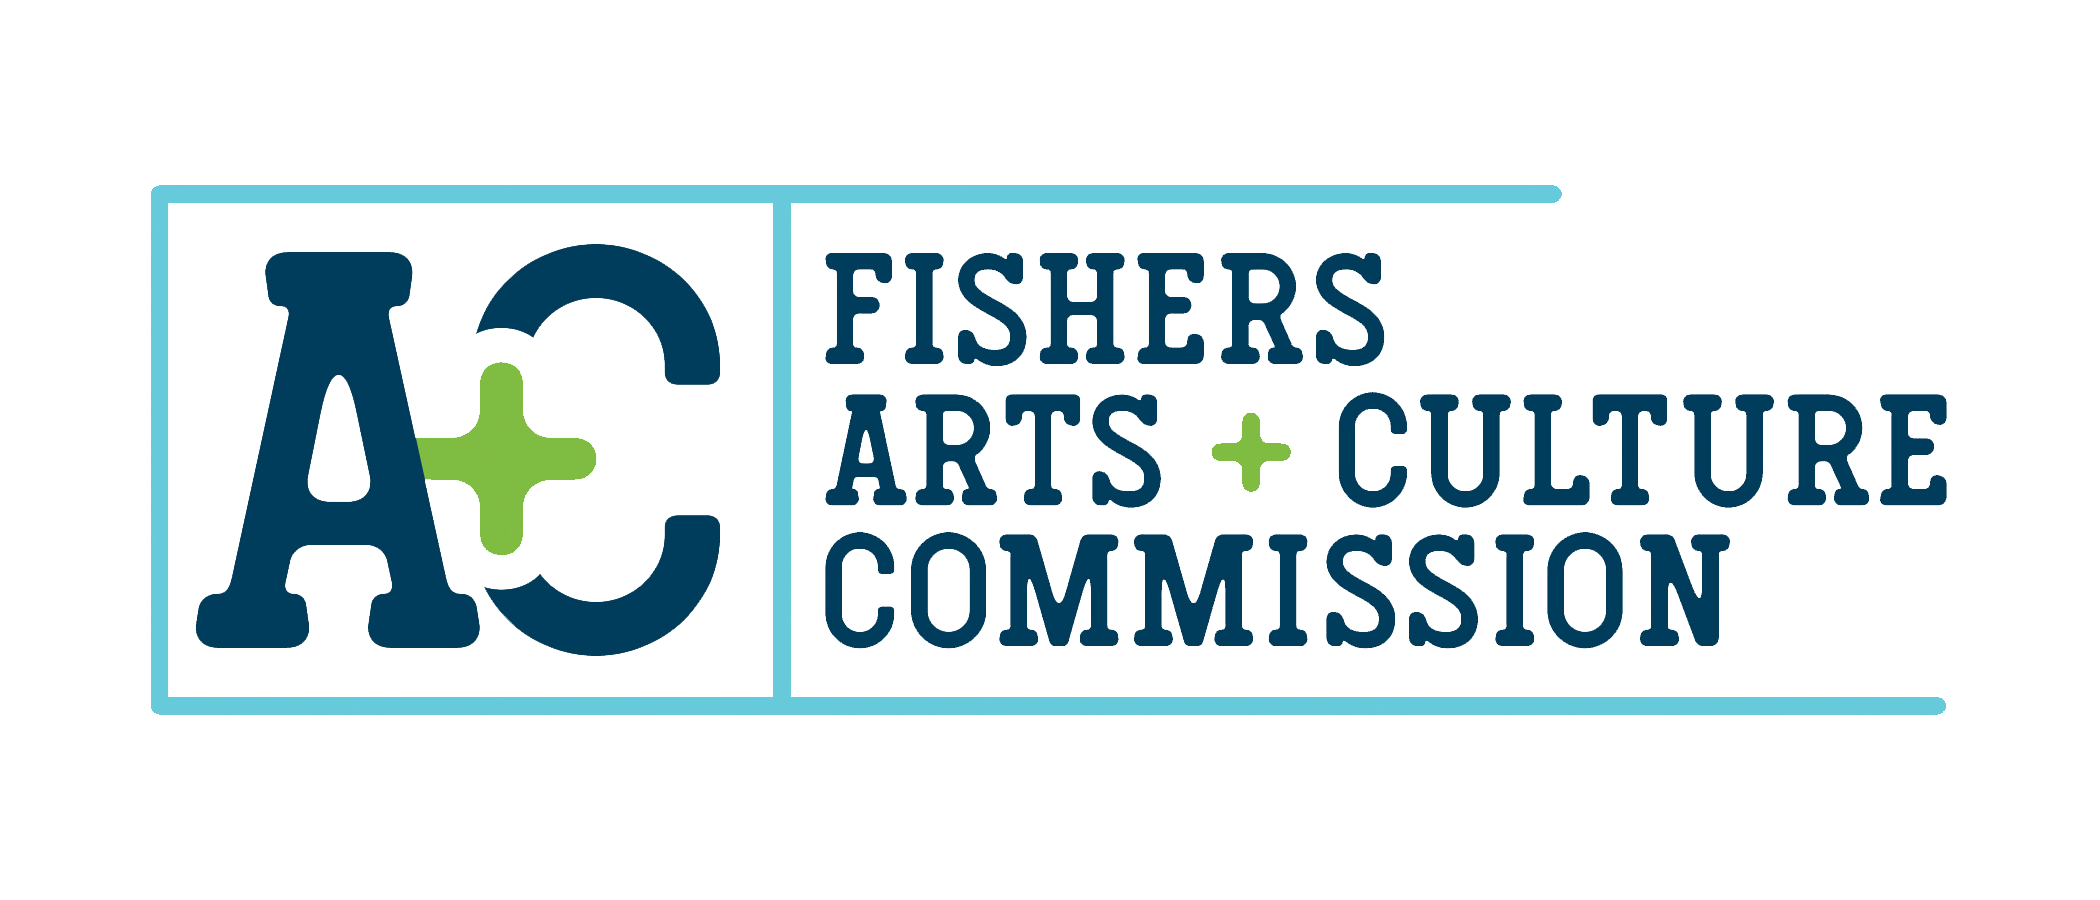 Fishers Arts + Culture Commission